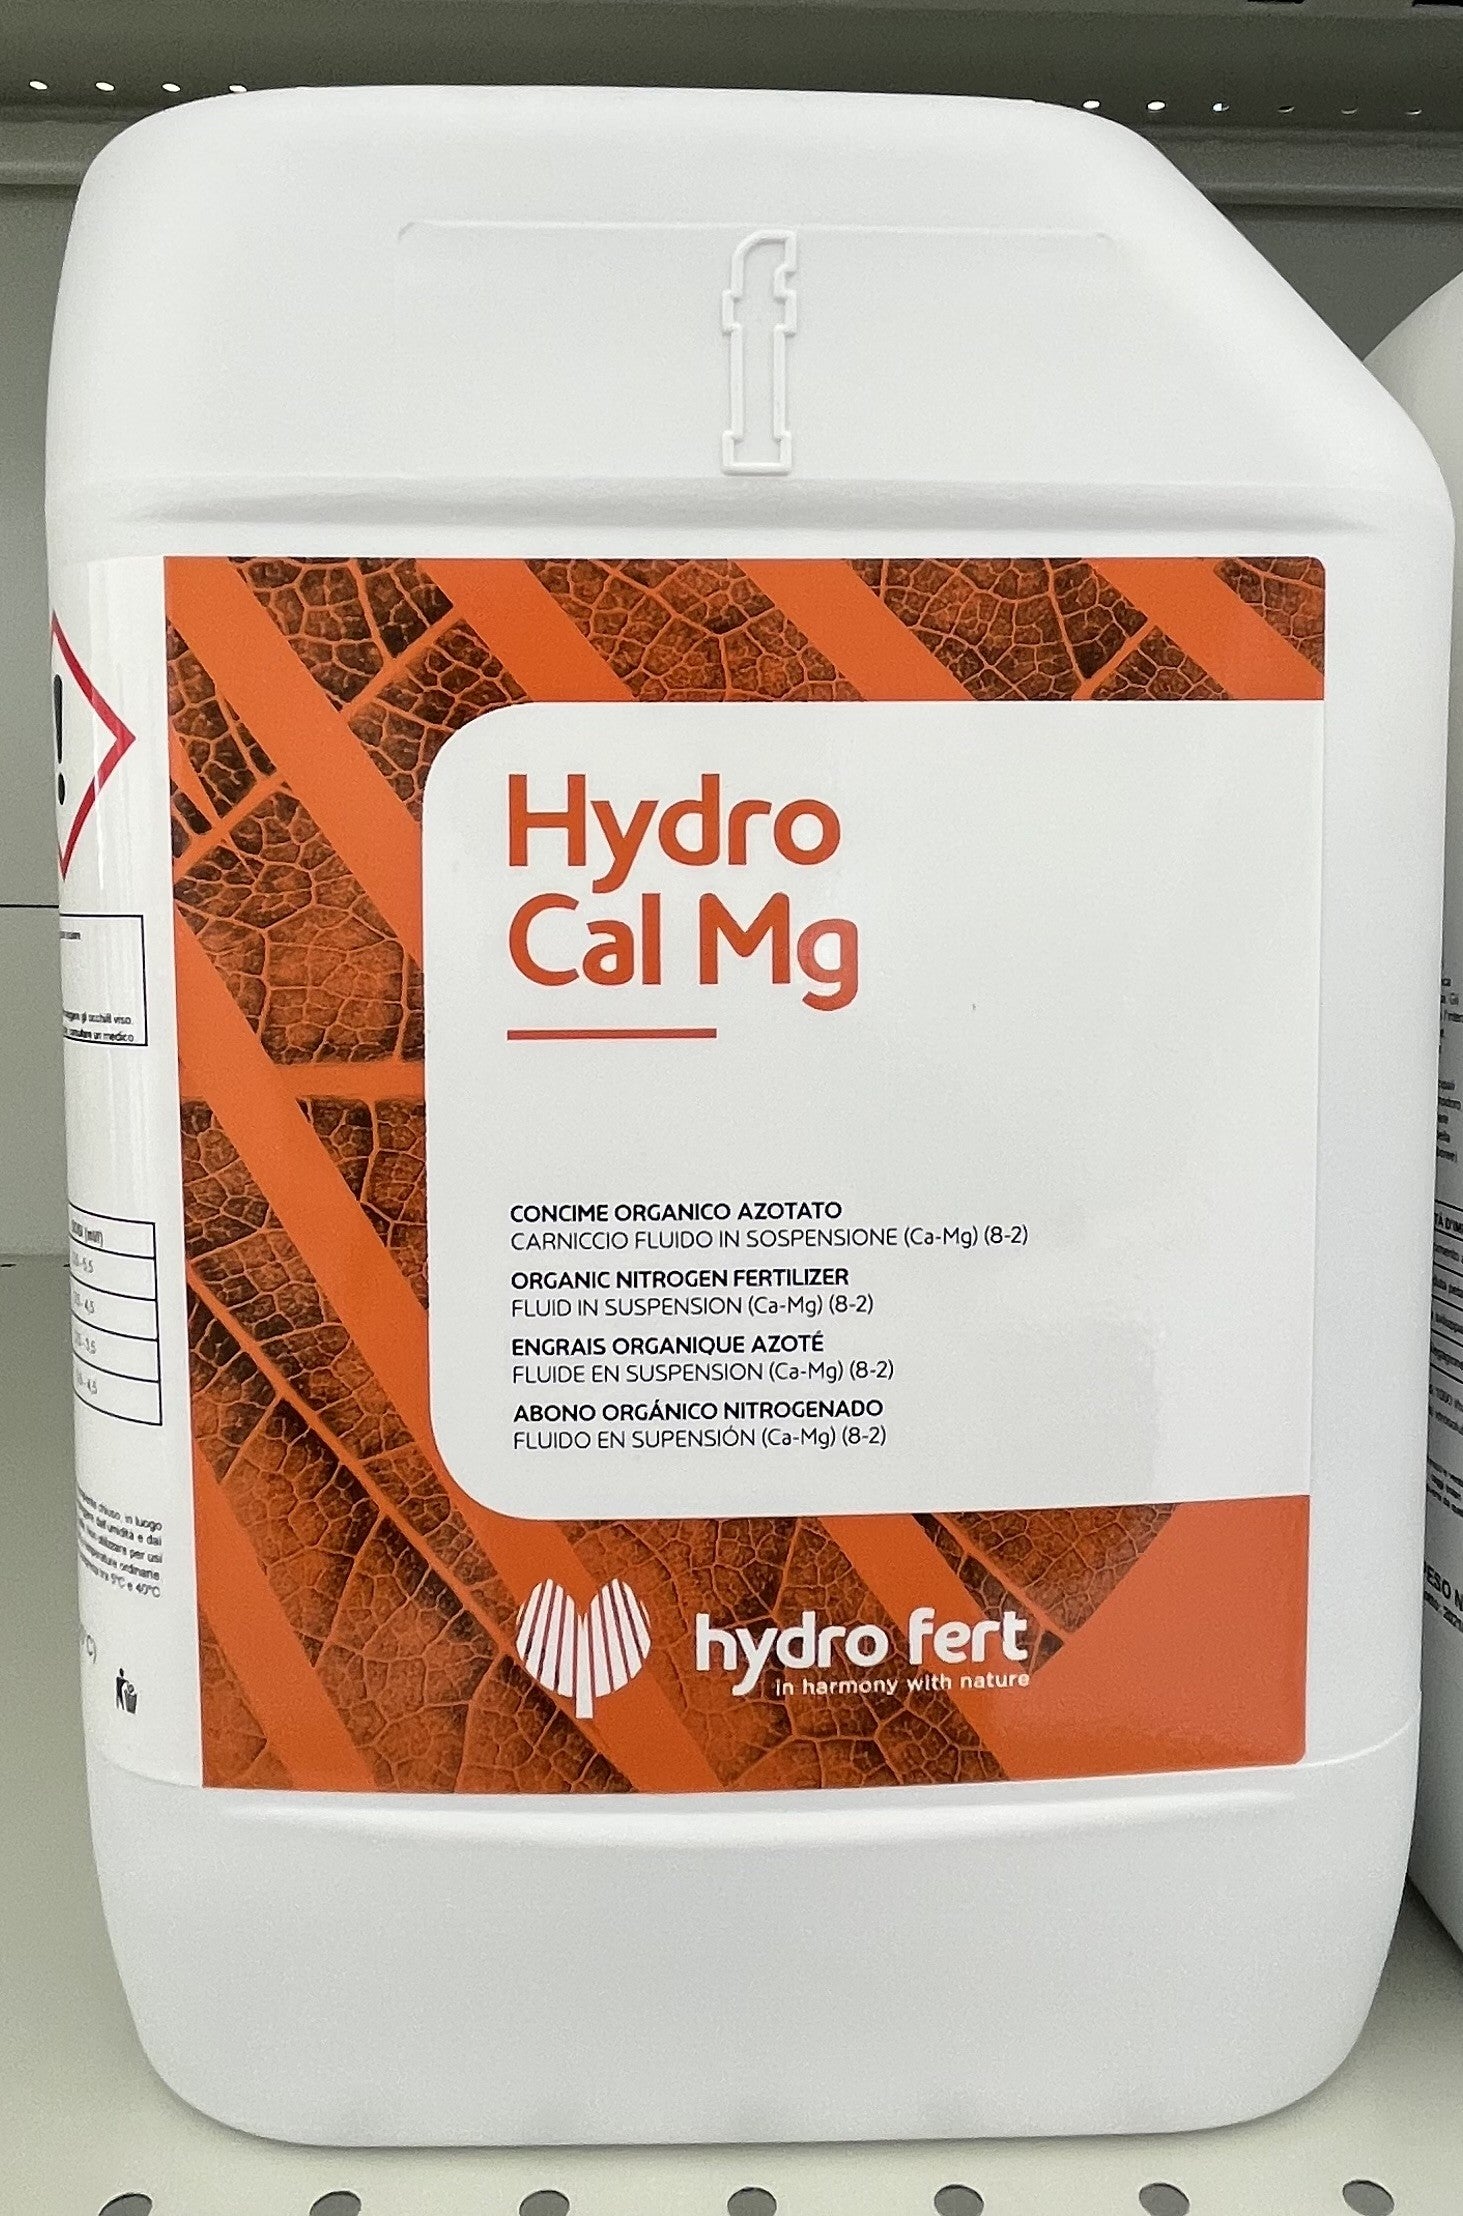 Hydro fert - Hydro Cal Mg - Concime - Organico - Azotato